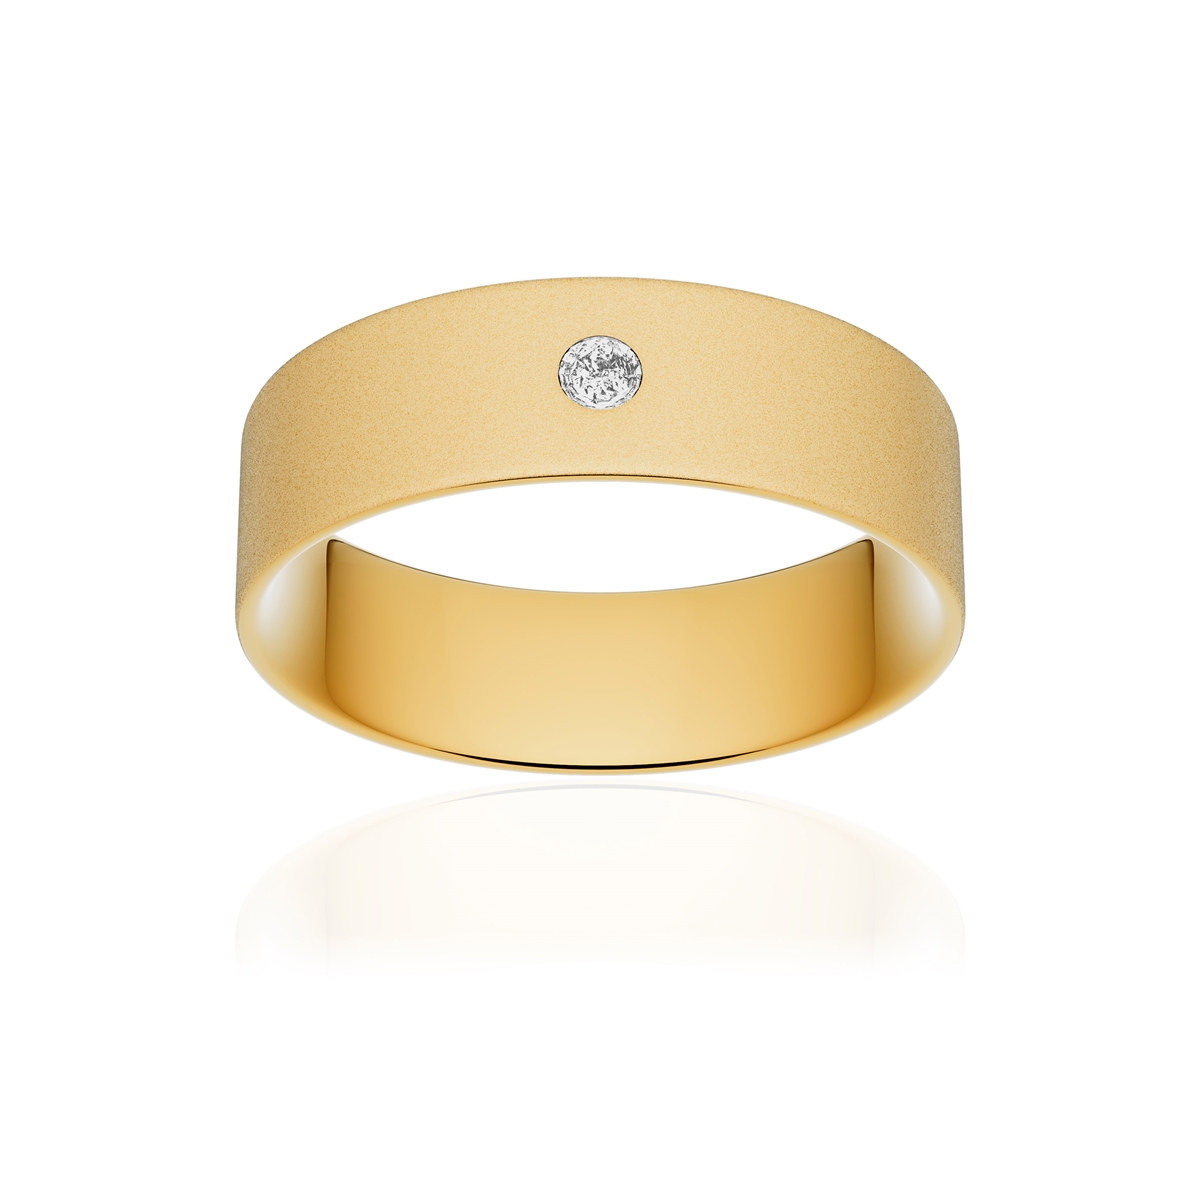 Alliance or 750 jaune sablé ruban plat confort 6mm diamant brillant